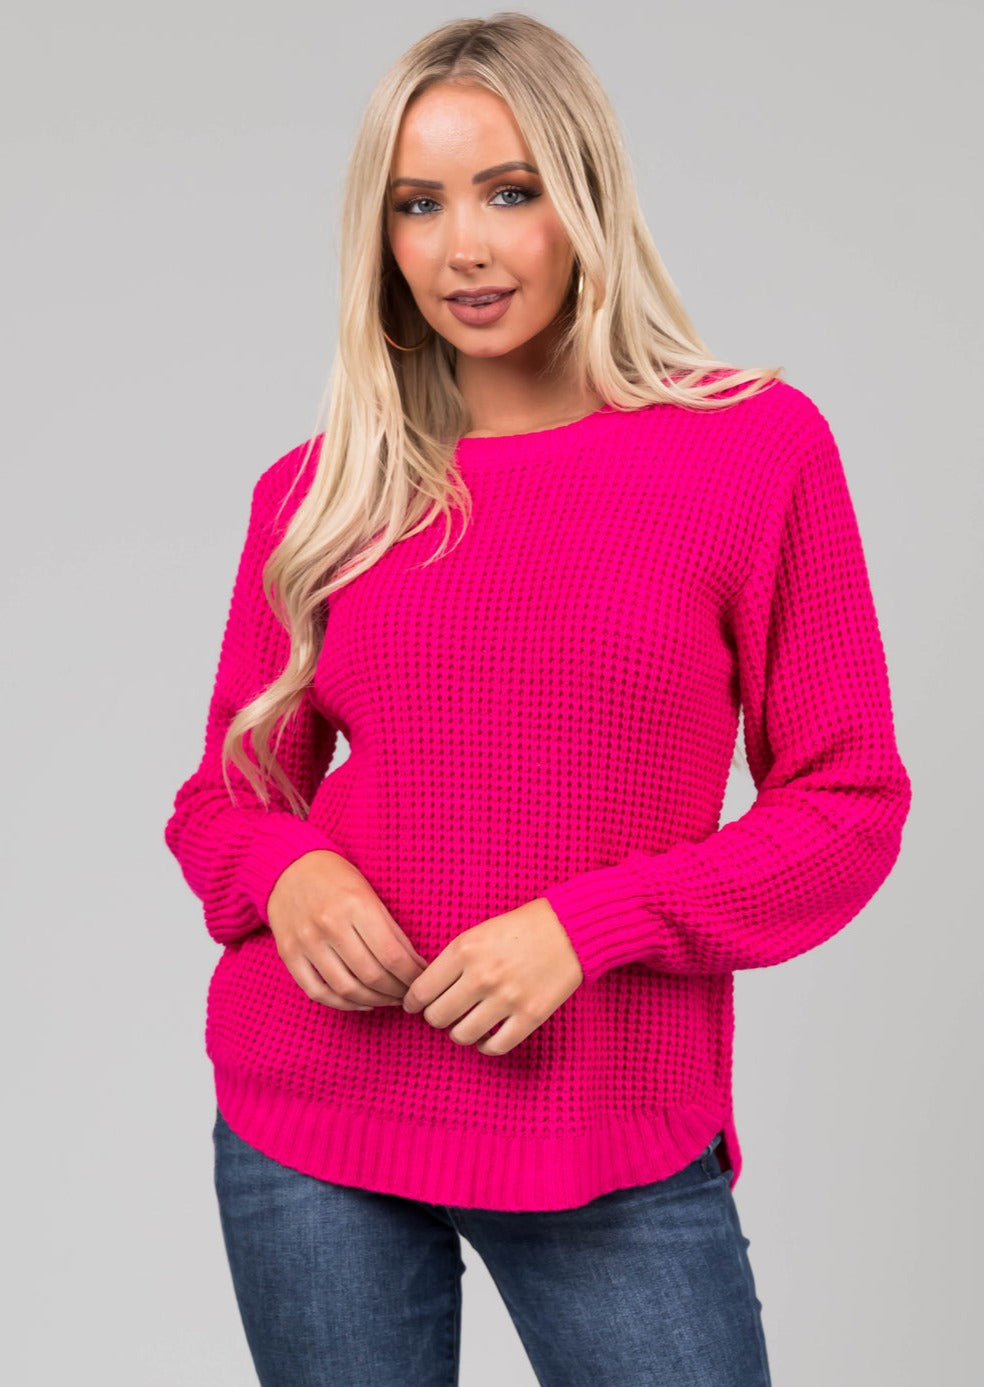 Zen Waffle Knit Sweater (Hot Pink)